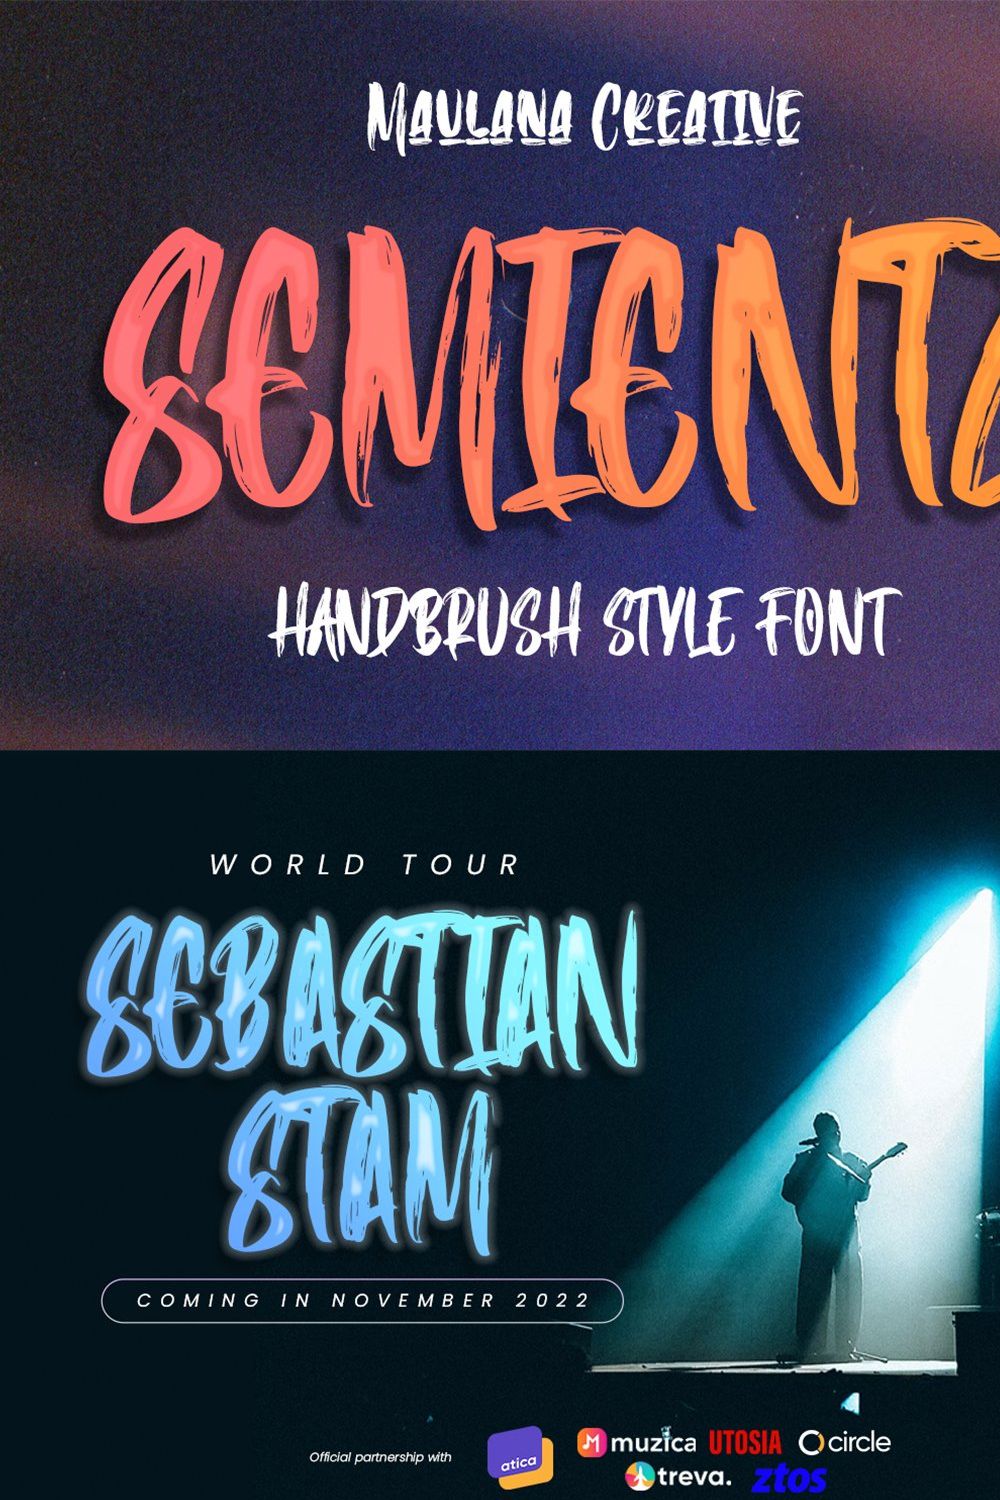 Semientz Handbrush Style Font pinterest preview image.